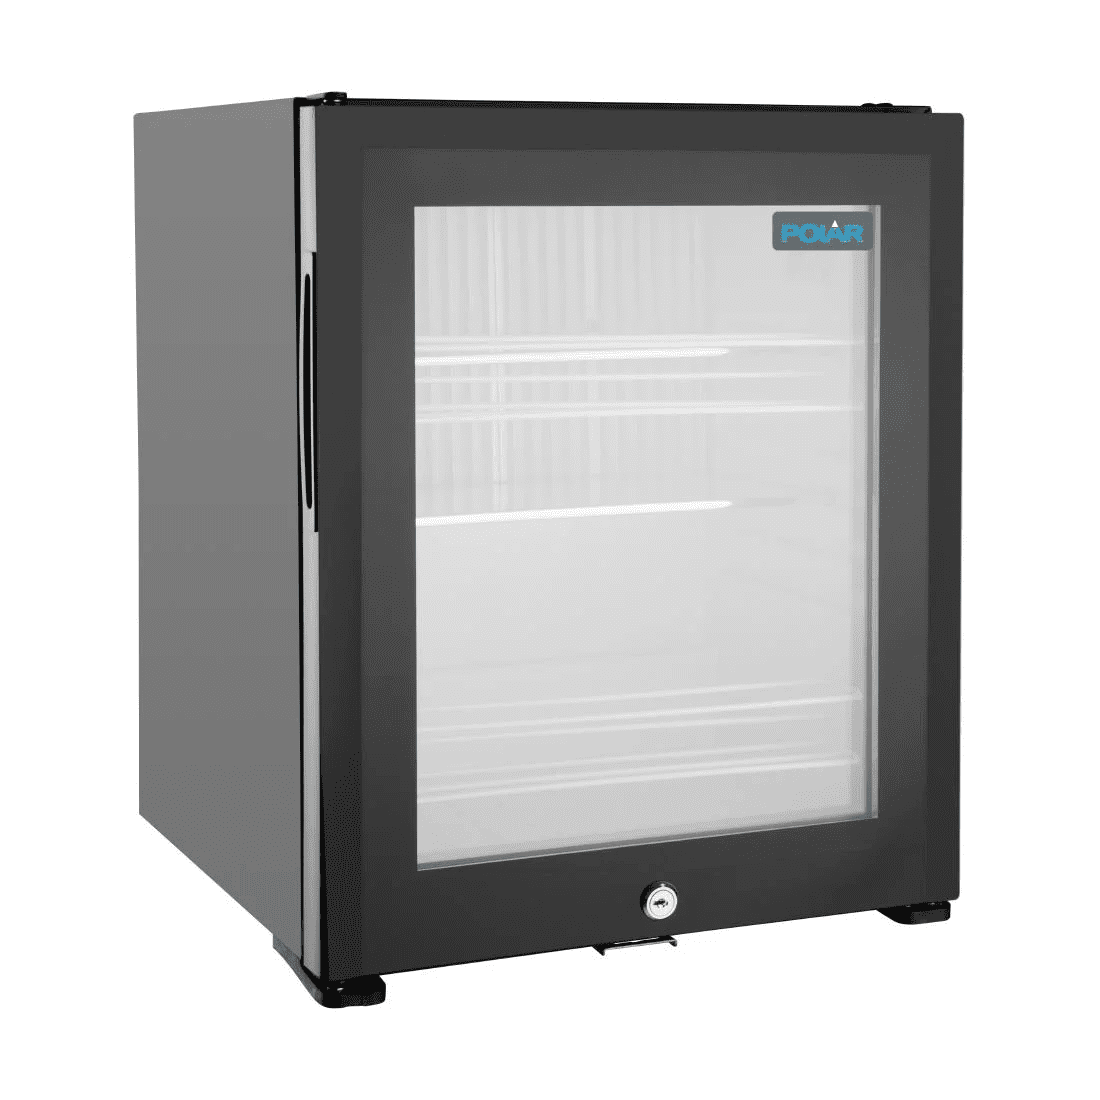 GE819 Polar G-Series Hotel Room Display Refrigerator